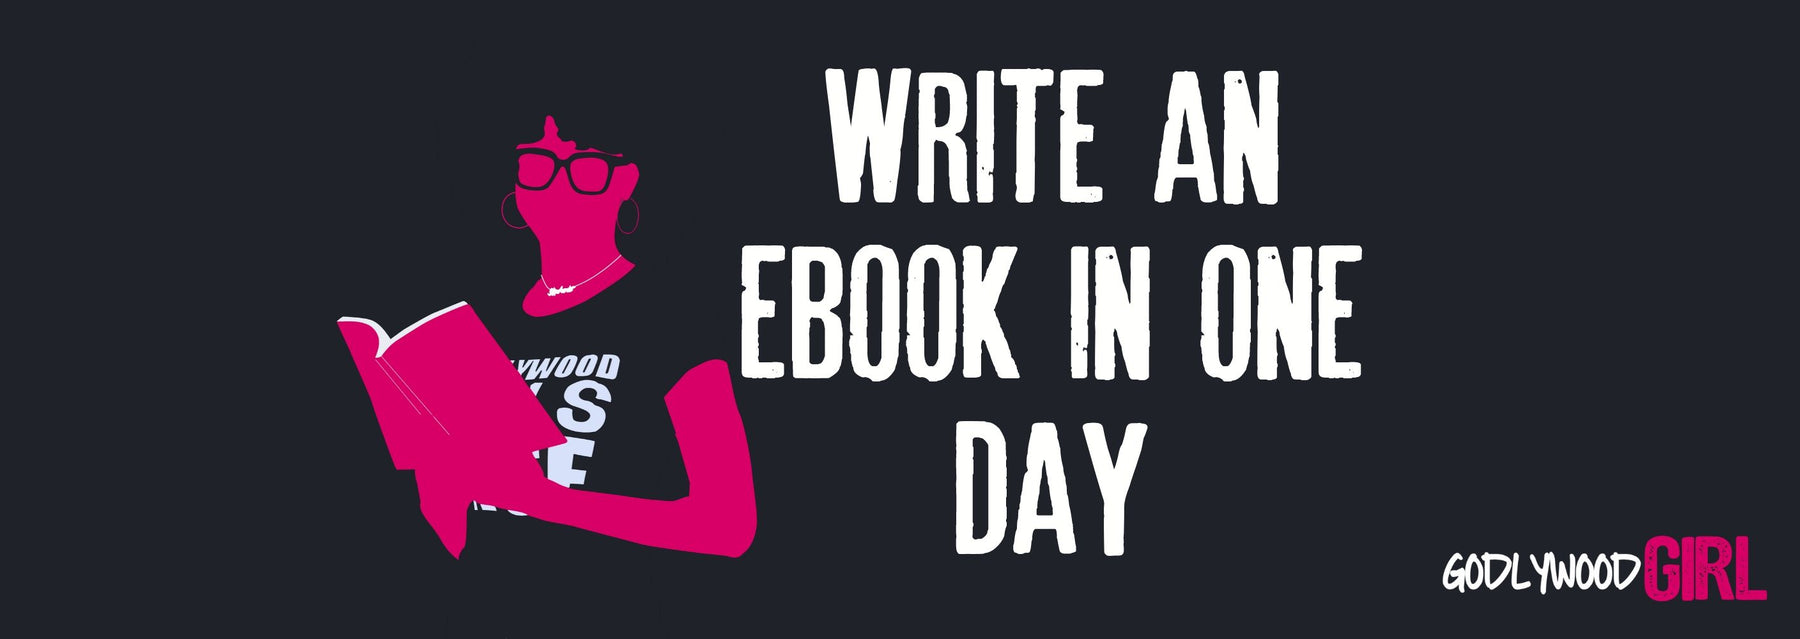 WRITE AN EBOOK IN A DAY | WRITE AN EBOOK IN 1 DAY | WRITING AN EBOOK SERIES (AUTHORTUBE)